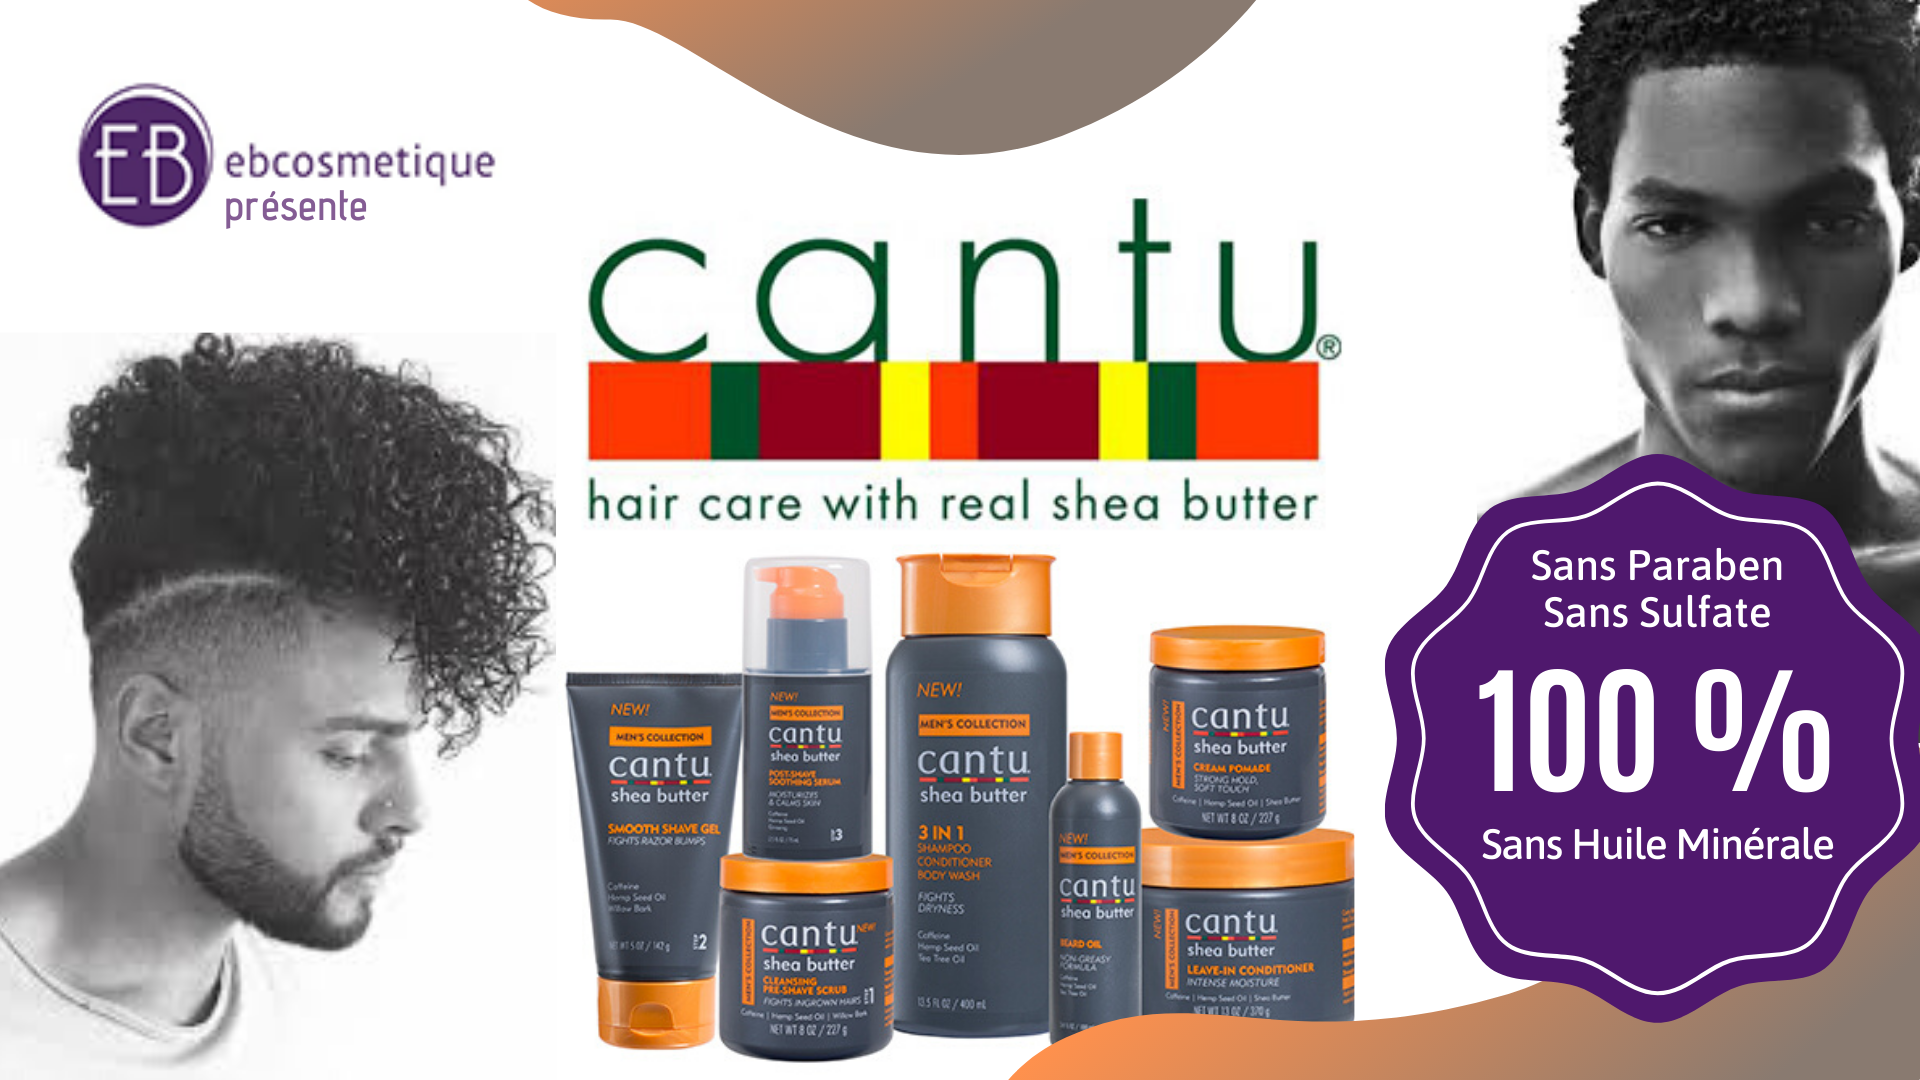 fiche produit ebcosmetique cantu shea butter natural hair men’s collection leave-in conditioner intense moisture